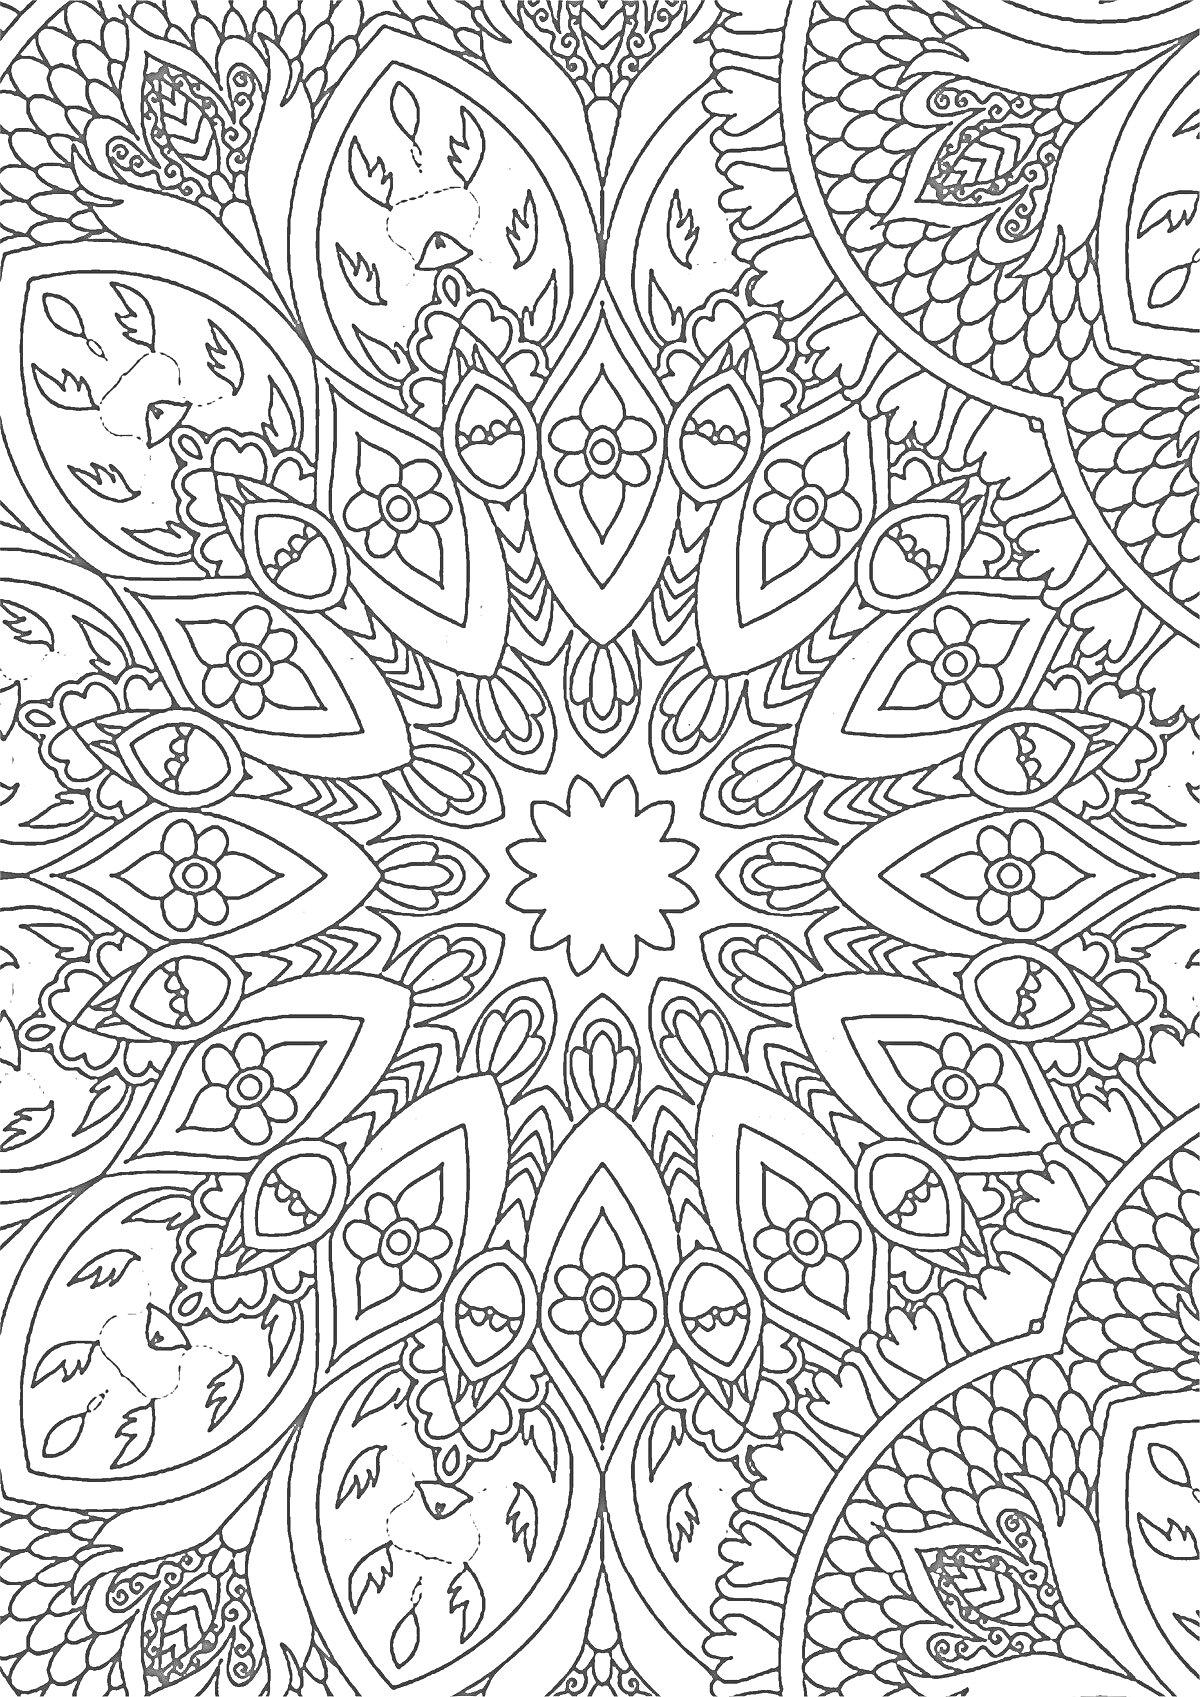 Раскраска Мандала с цветочными орнаментами и узорами